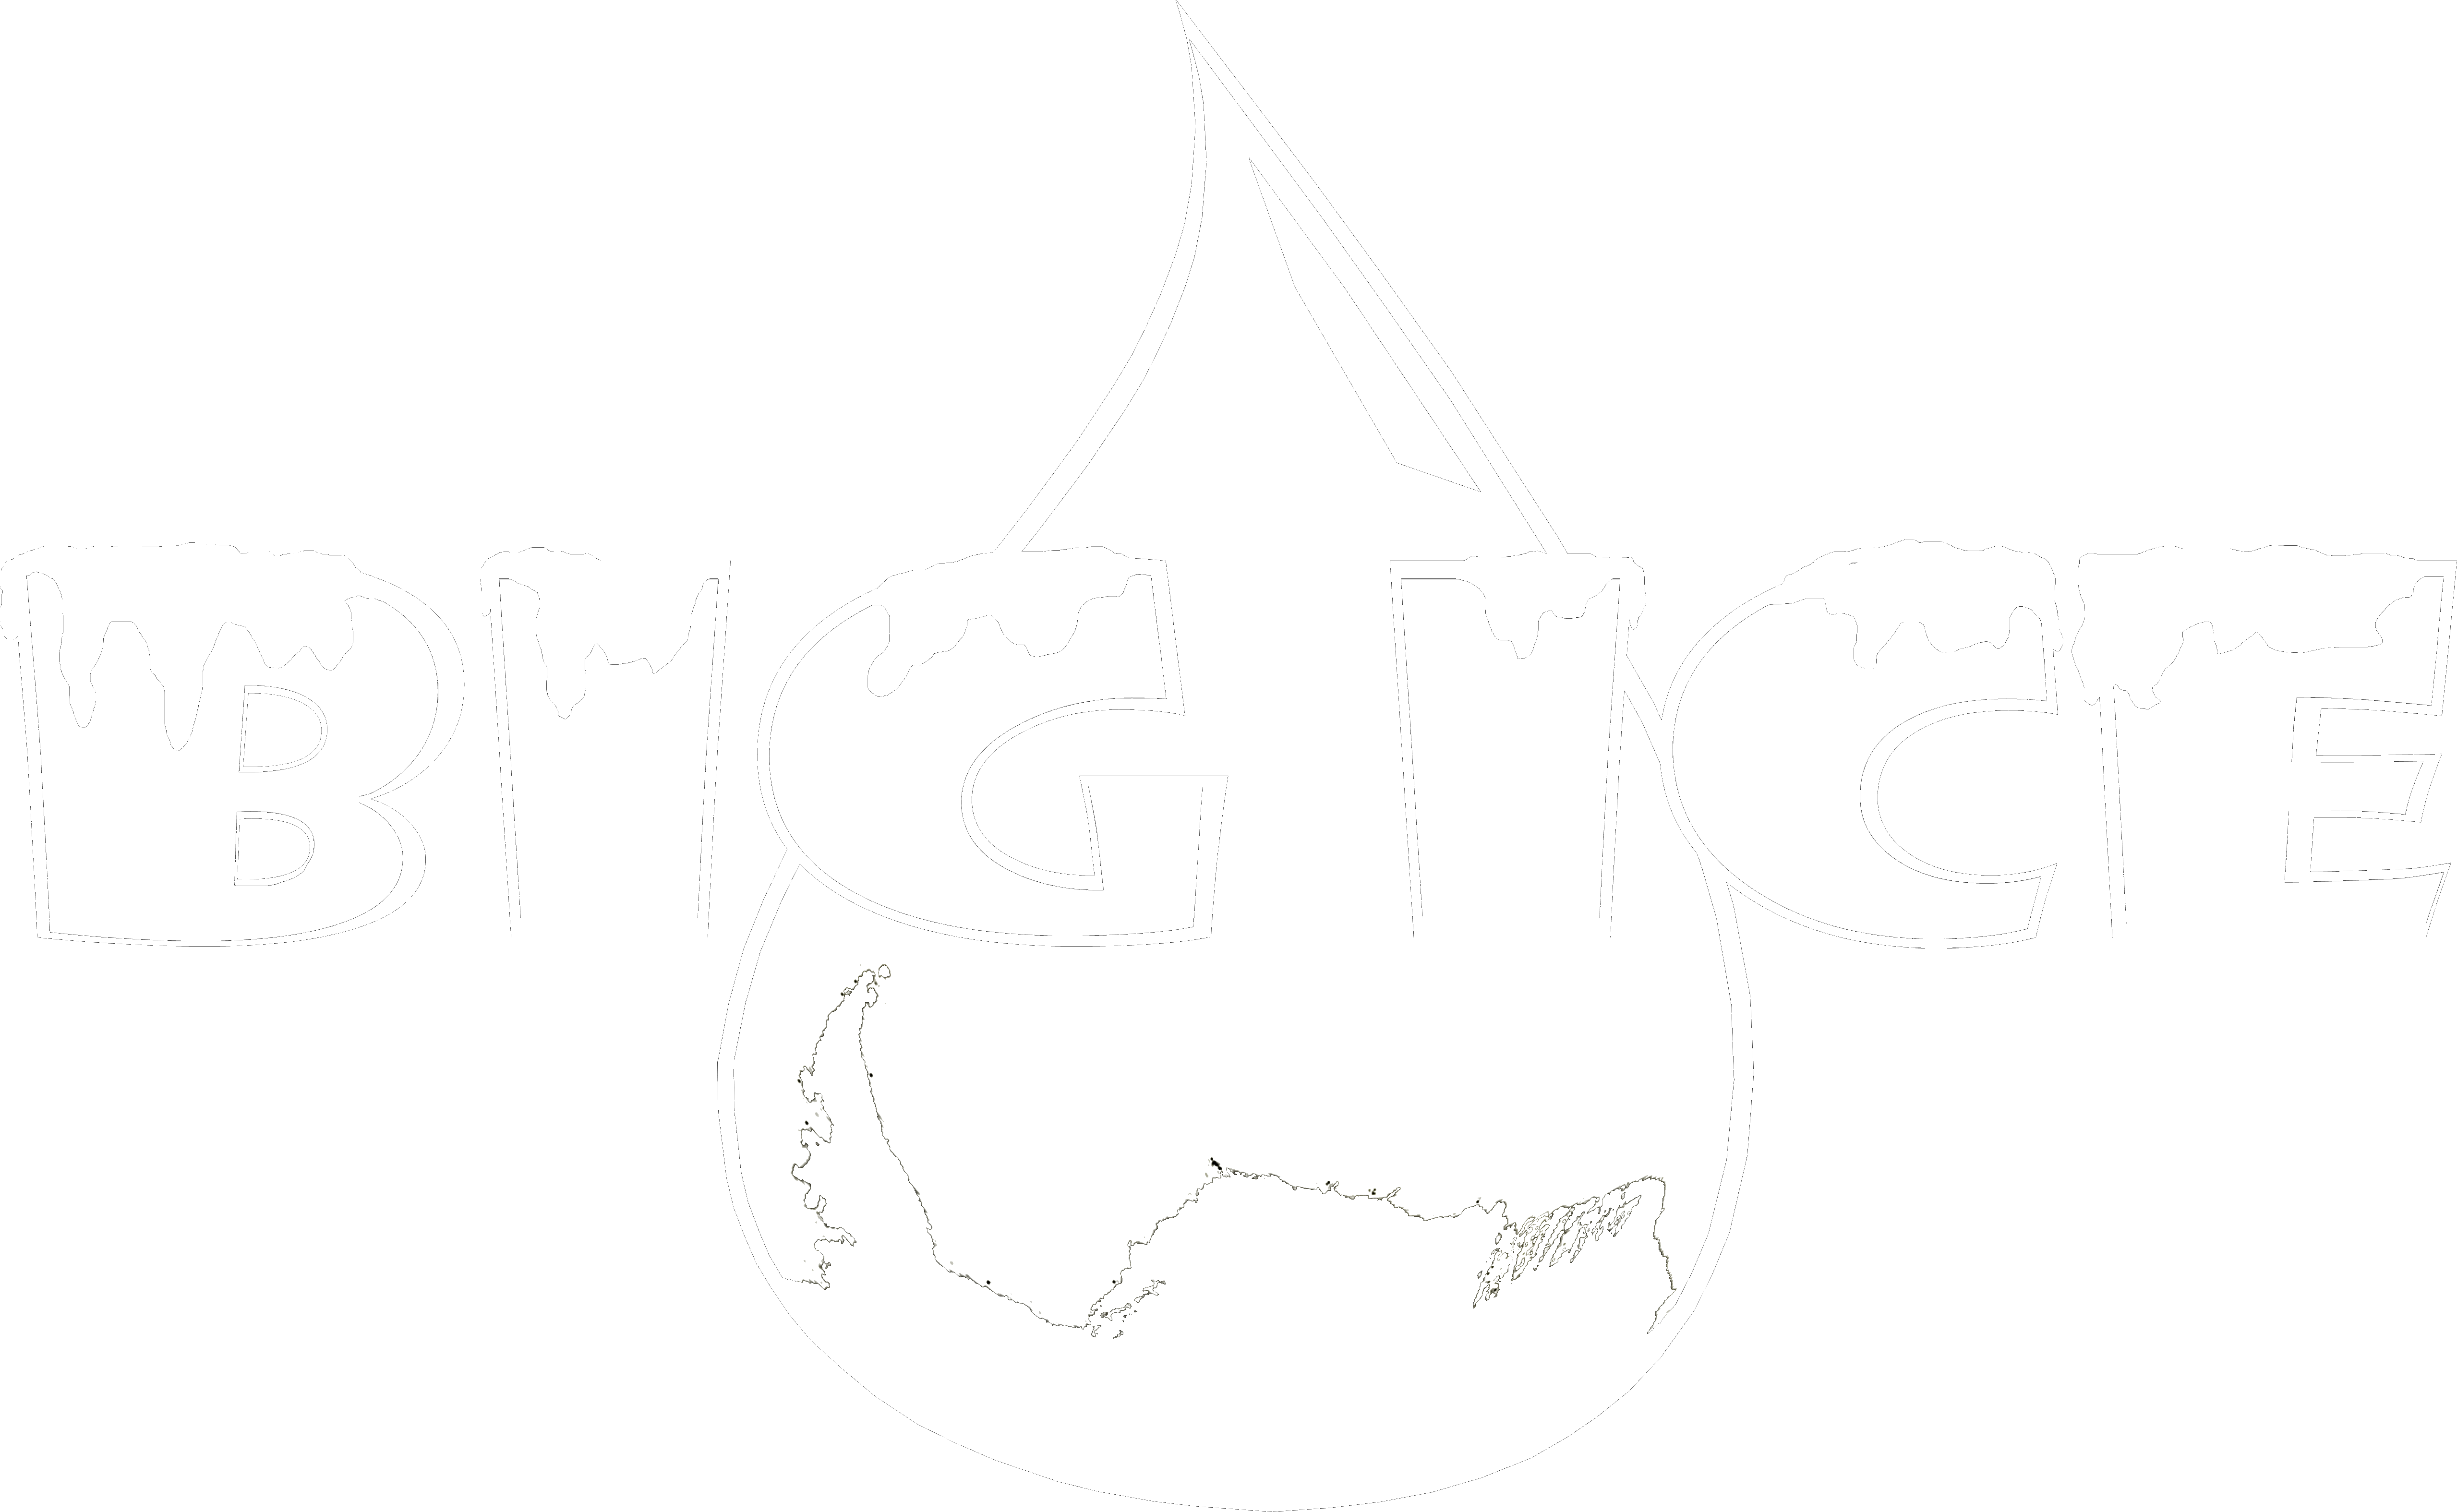 Bigice logo